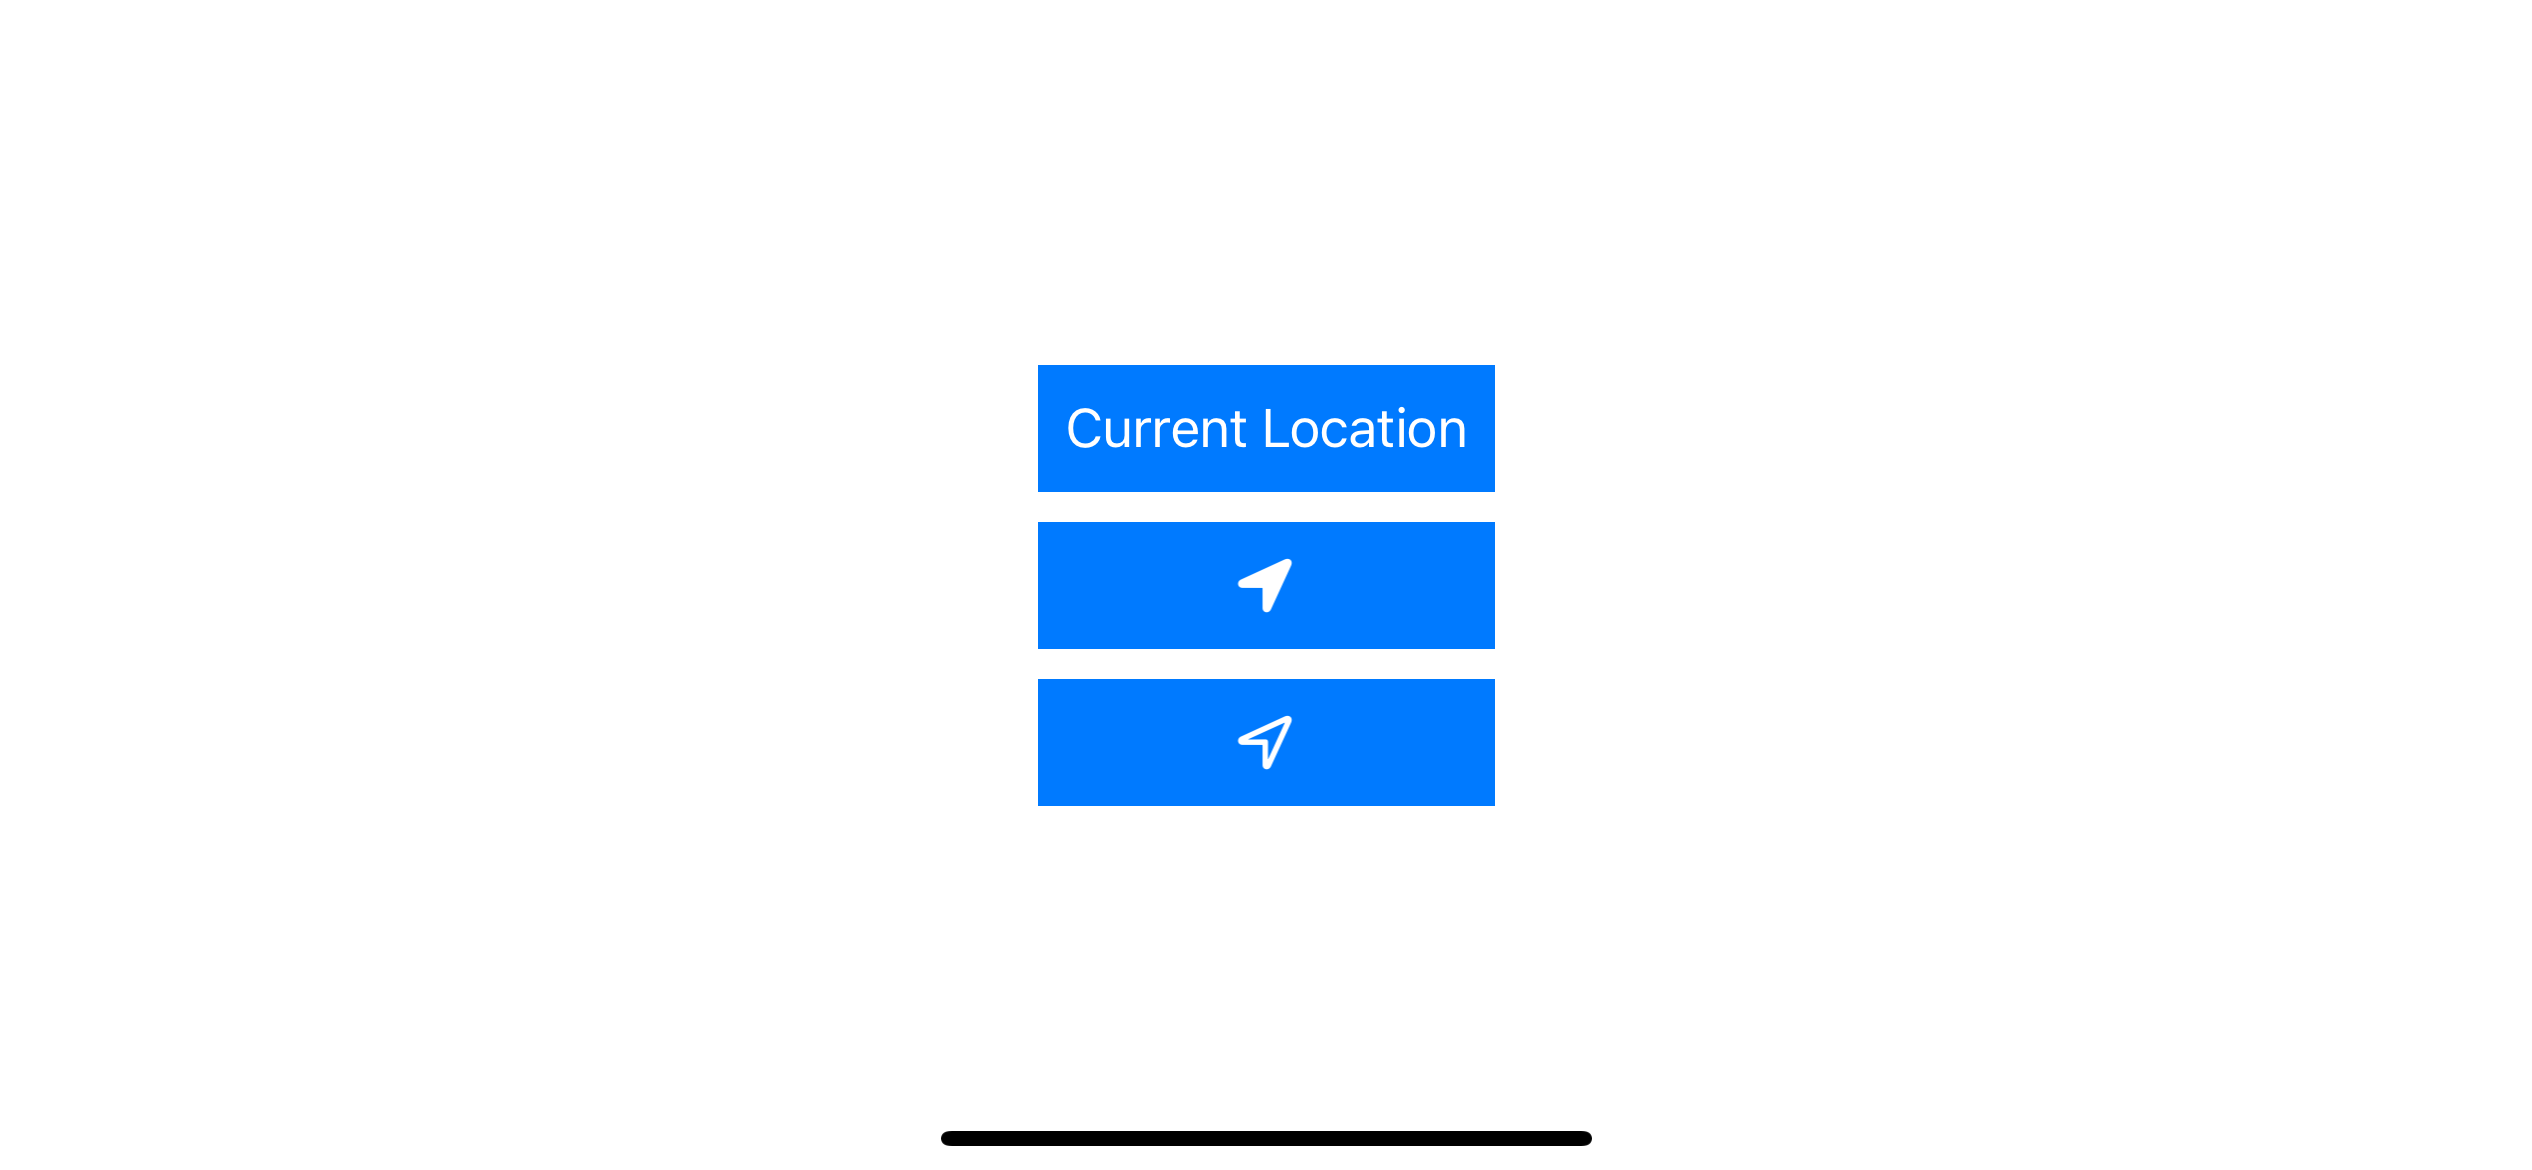 Use Location